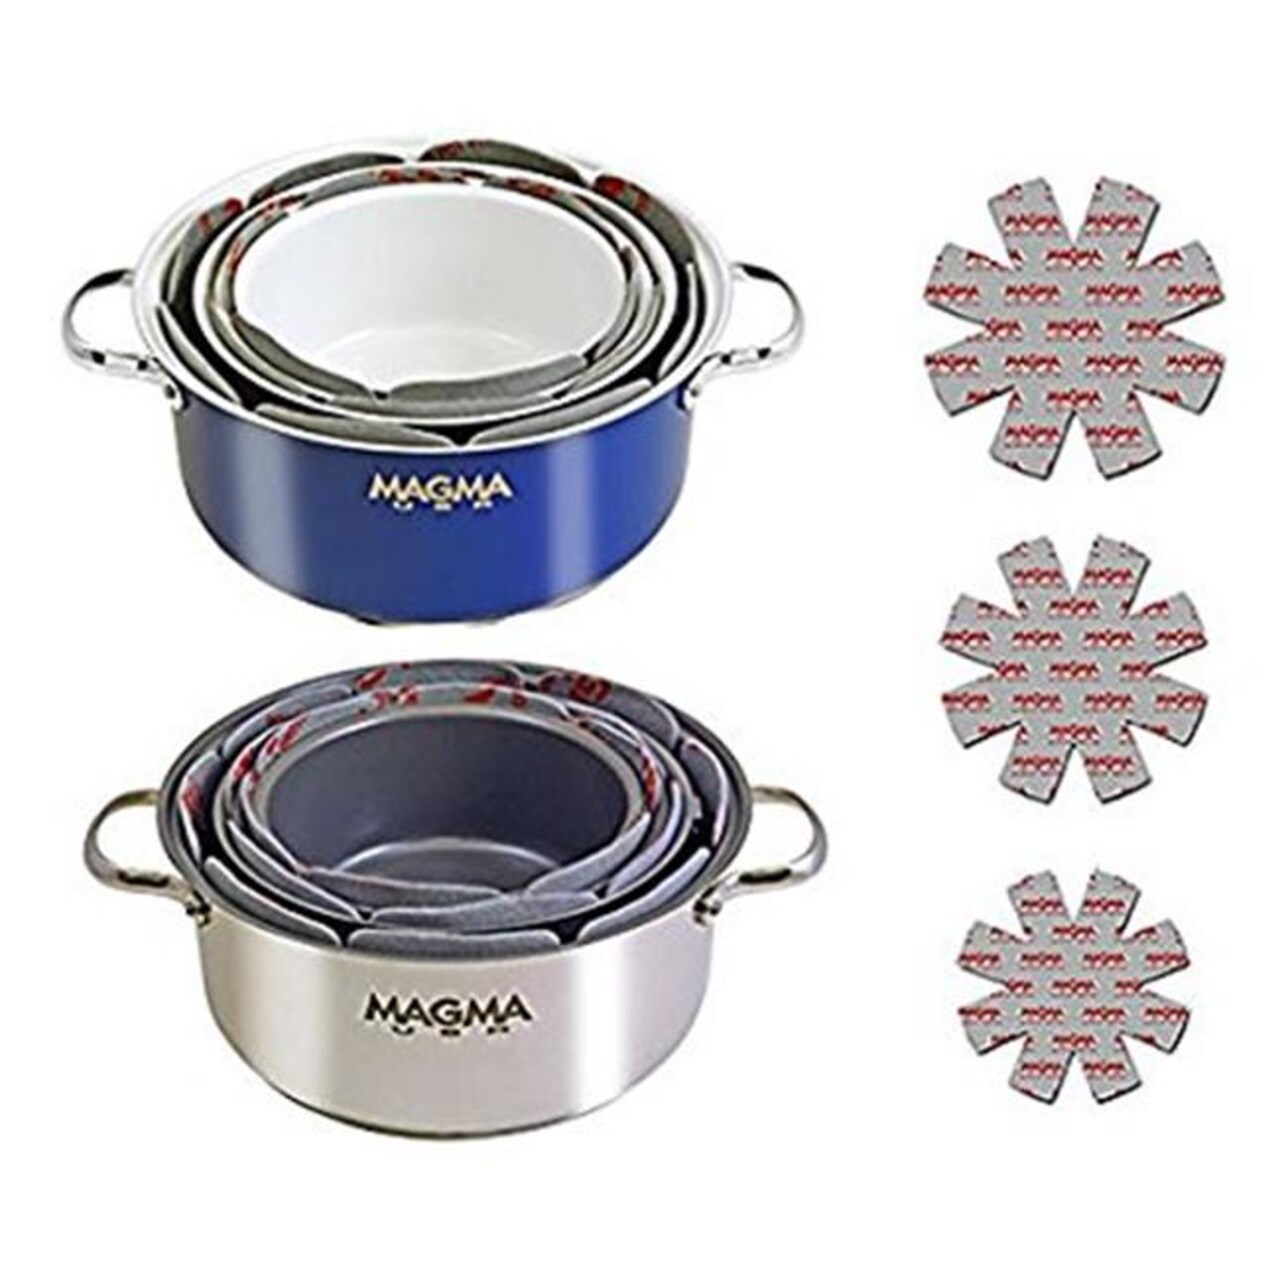 Magma Products M4J-A10368 No-Skid Pot & Pan Protectors Set - Pack